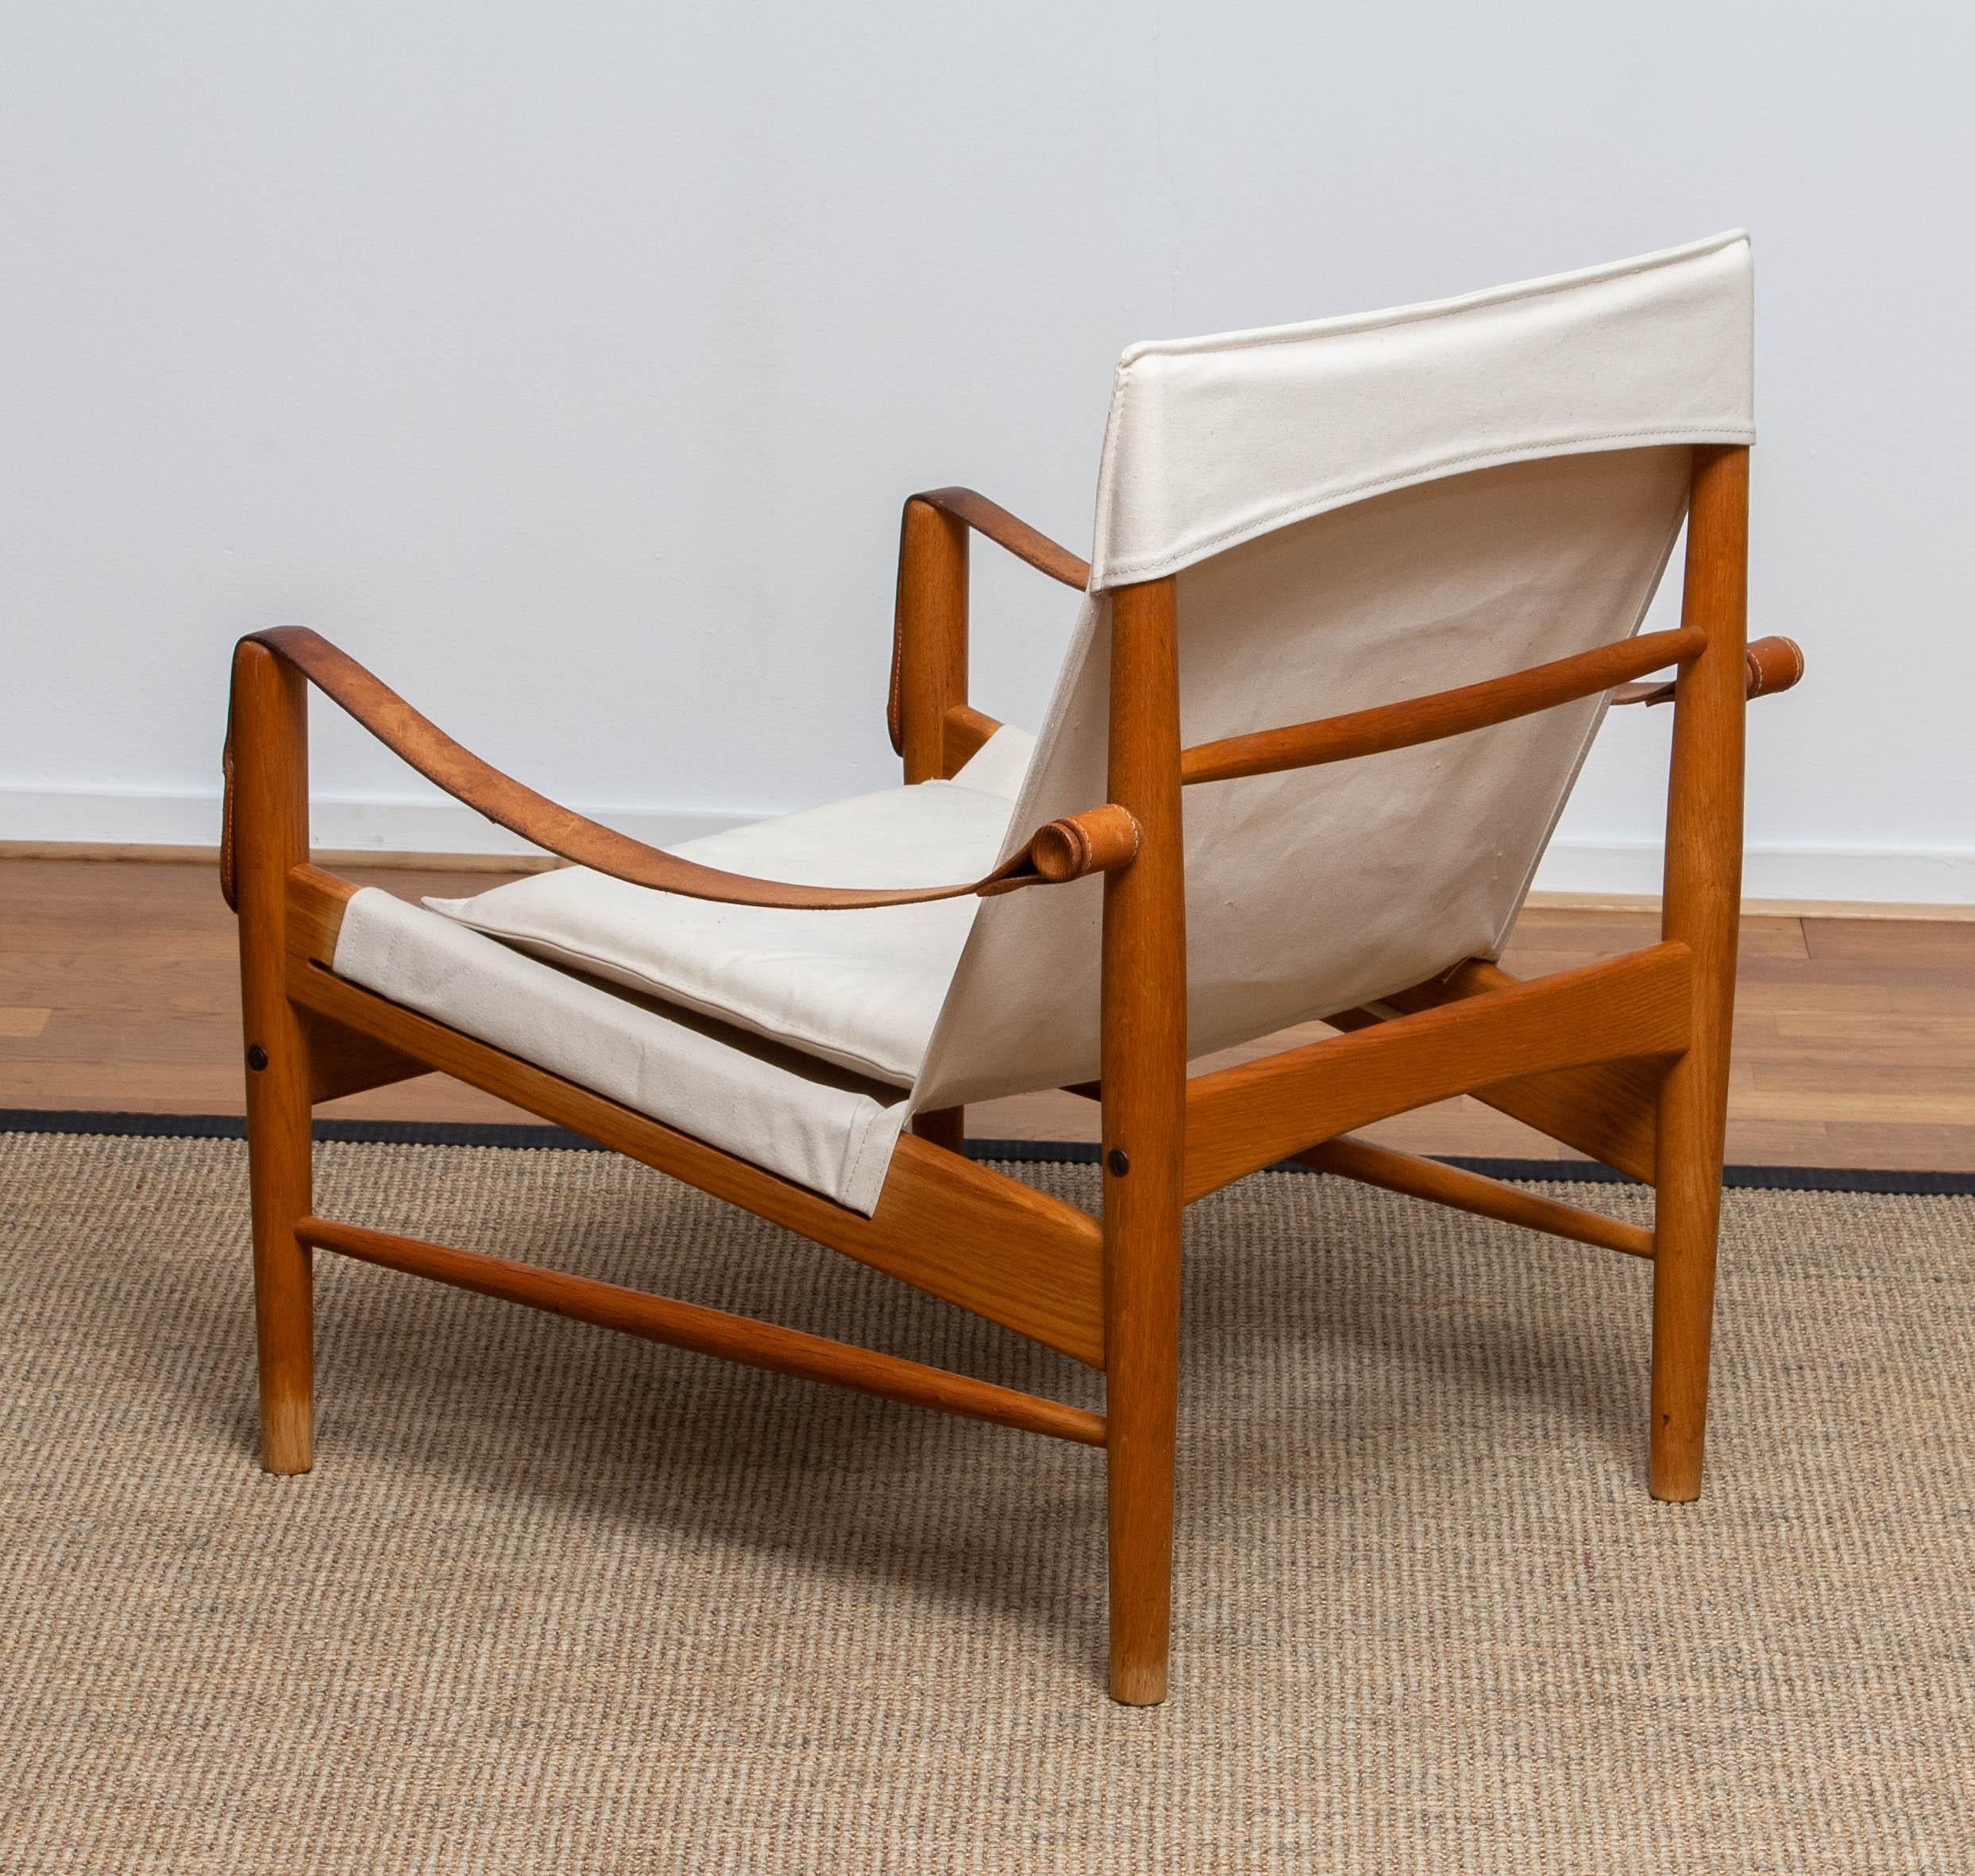 Mid-20th Century 1960s, Pair of Safari Chairs by Hans Olsen for Viska Möbler in Kinna, Sweden For Sale